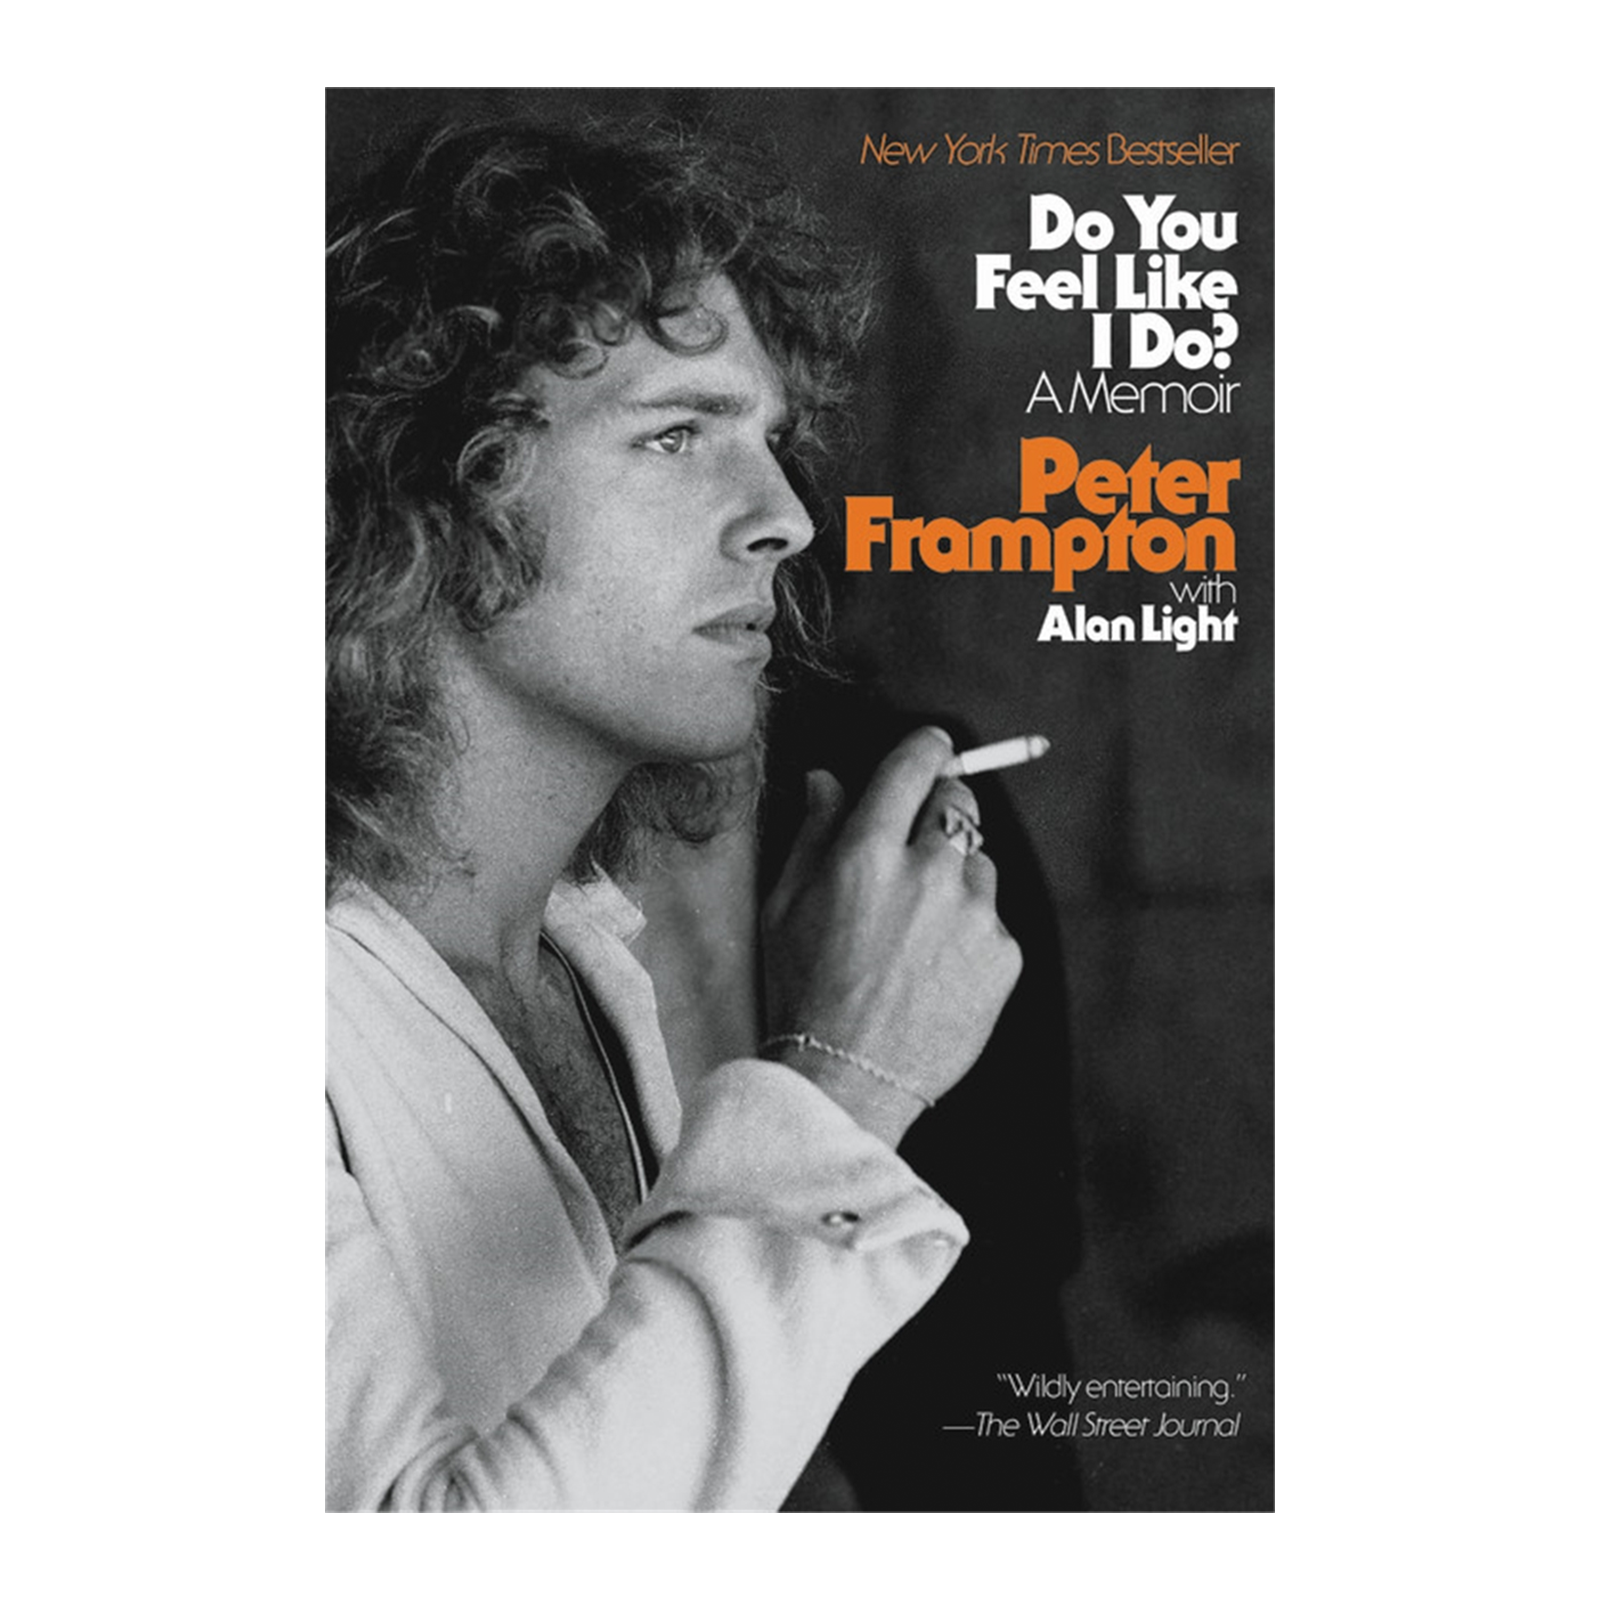 Peter Frampton, Alan Light - Do You Feel Like I Do? - A Memoir: Signed Book (by Peter Frampton)